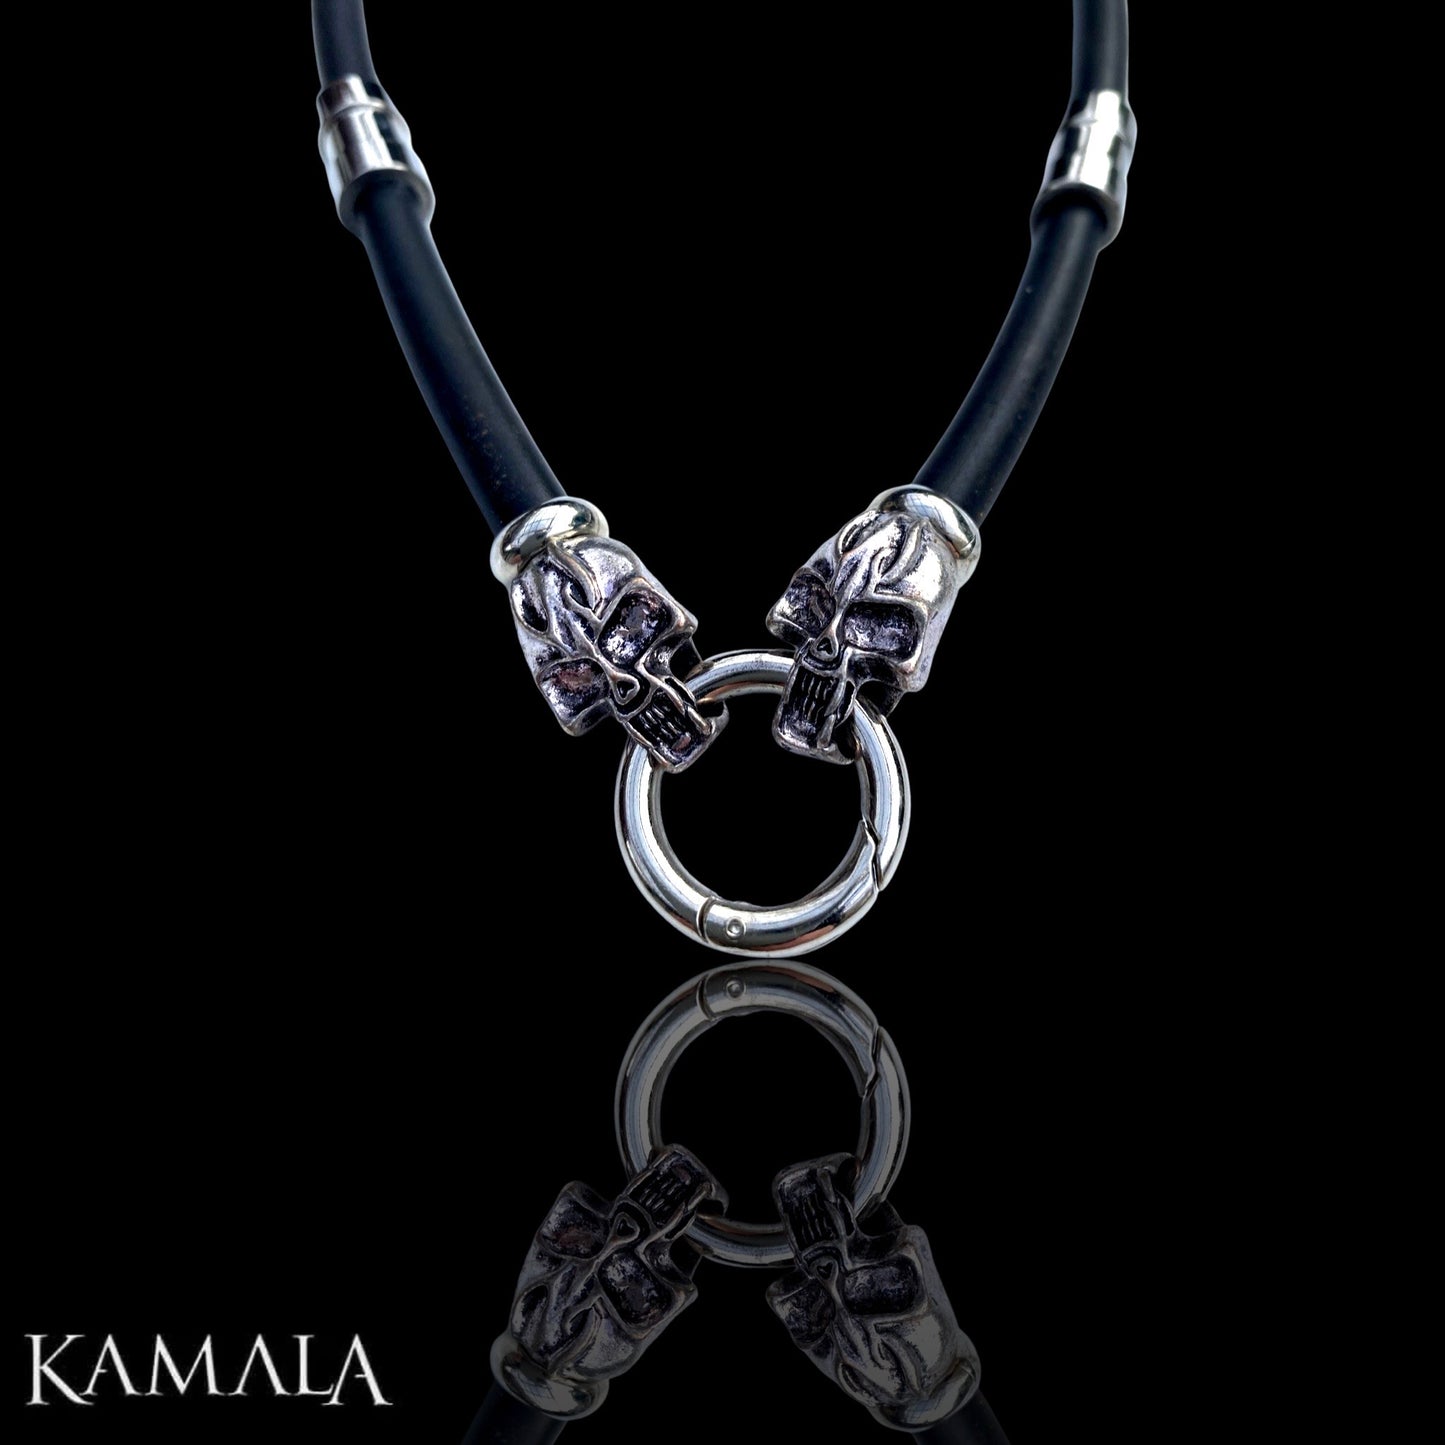 Kautschuk Halskette mit Edelstahl & Skulls - Gambino Silber Skulls